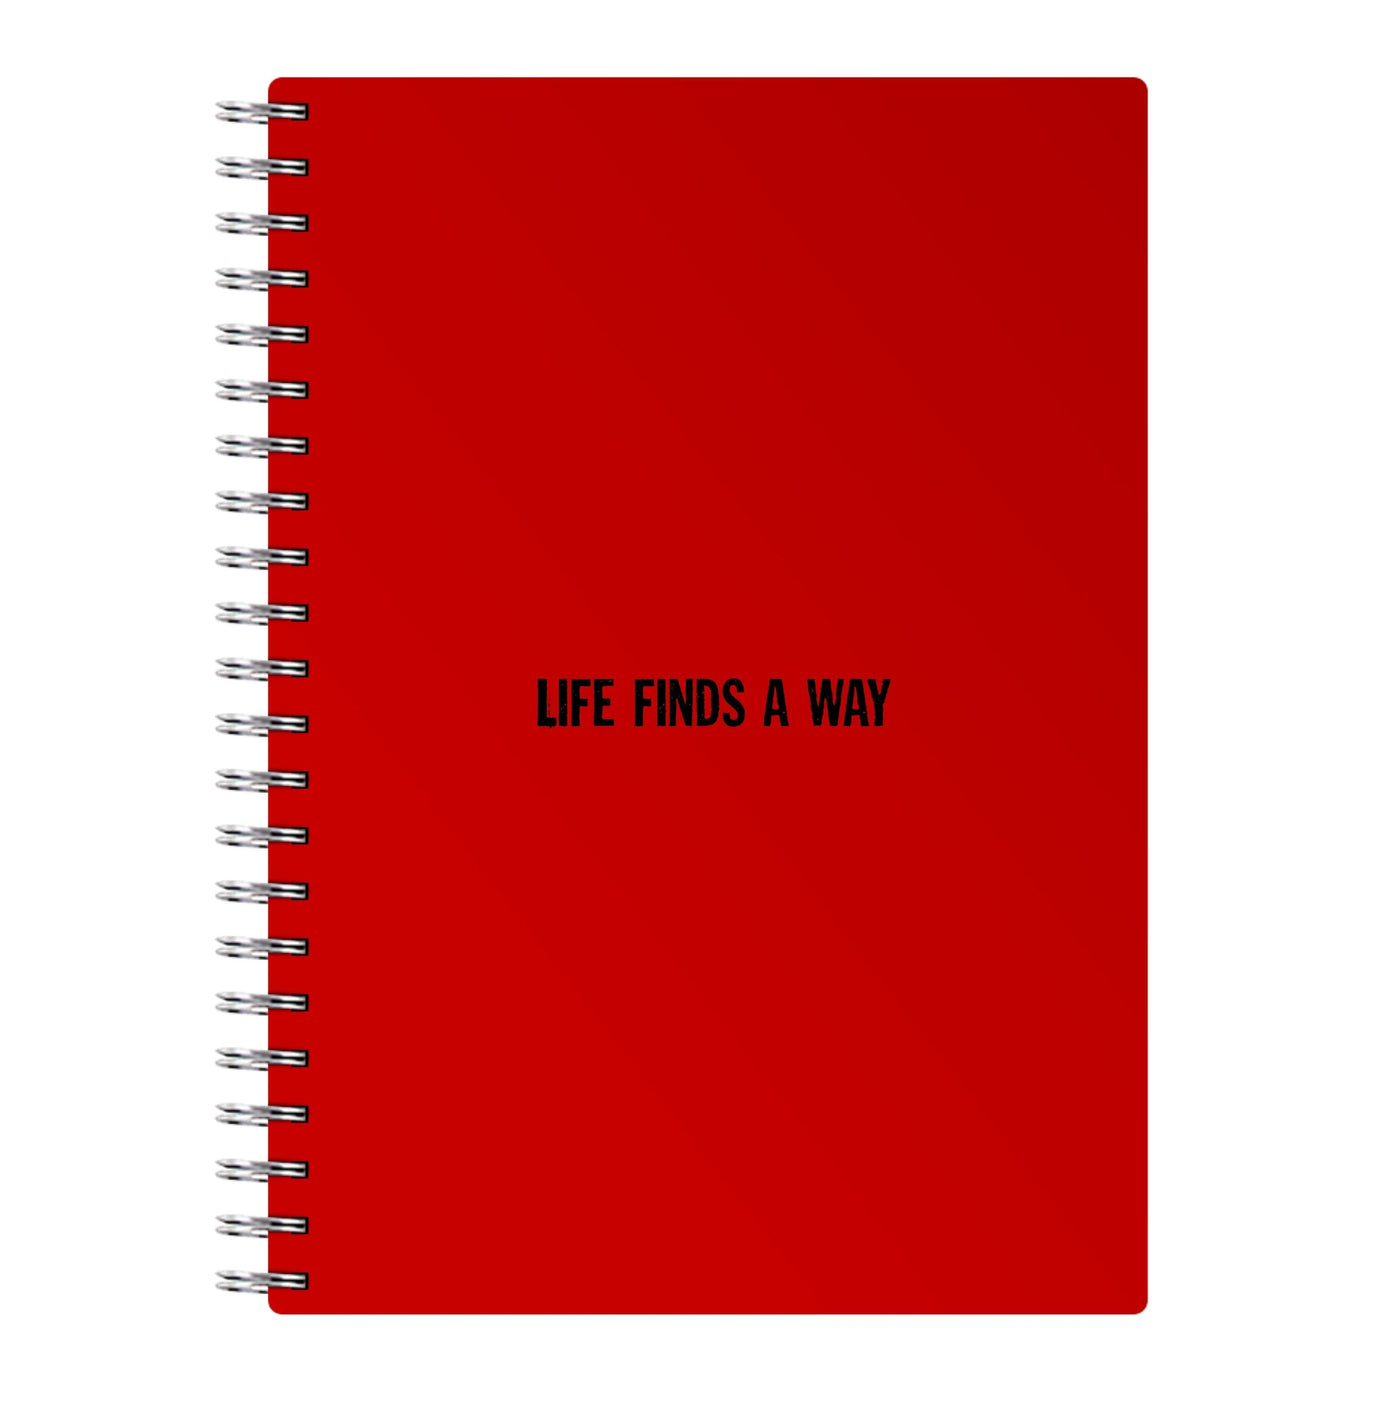 Life finds a way - Jurassic Park Notebook